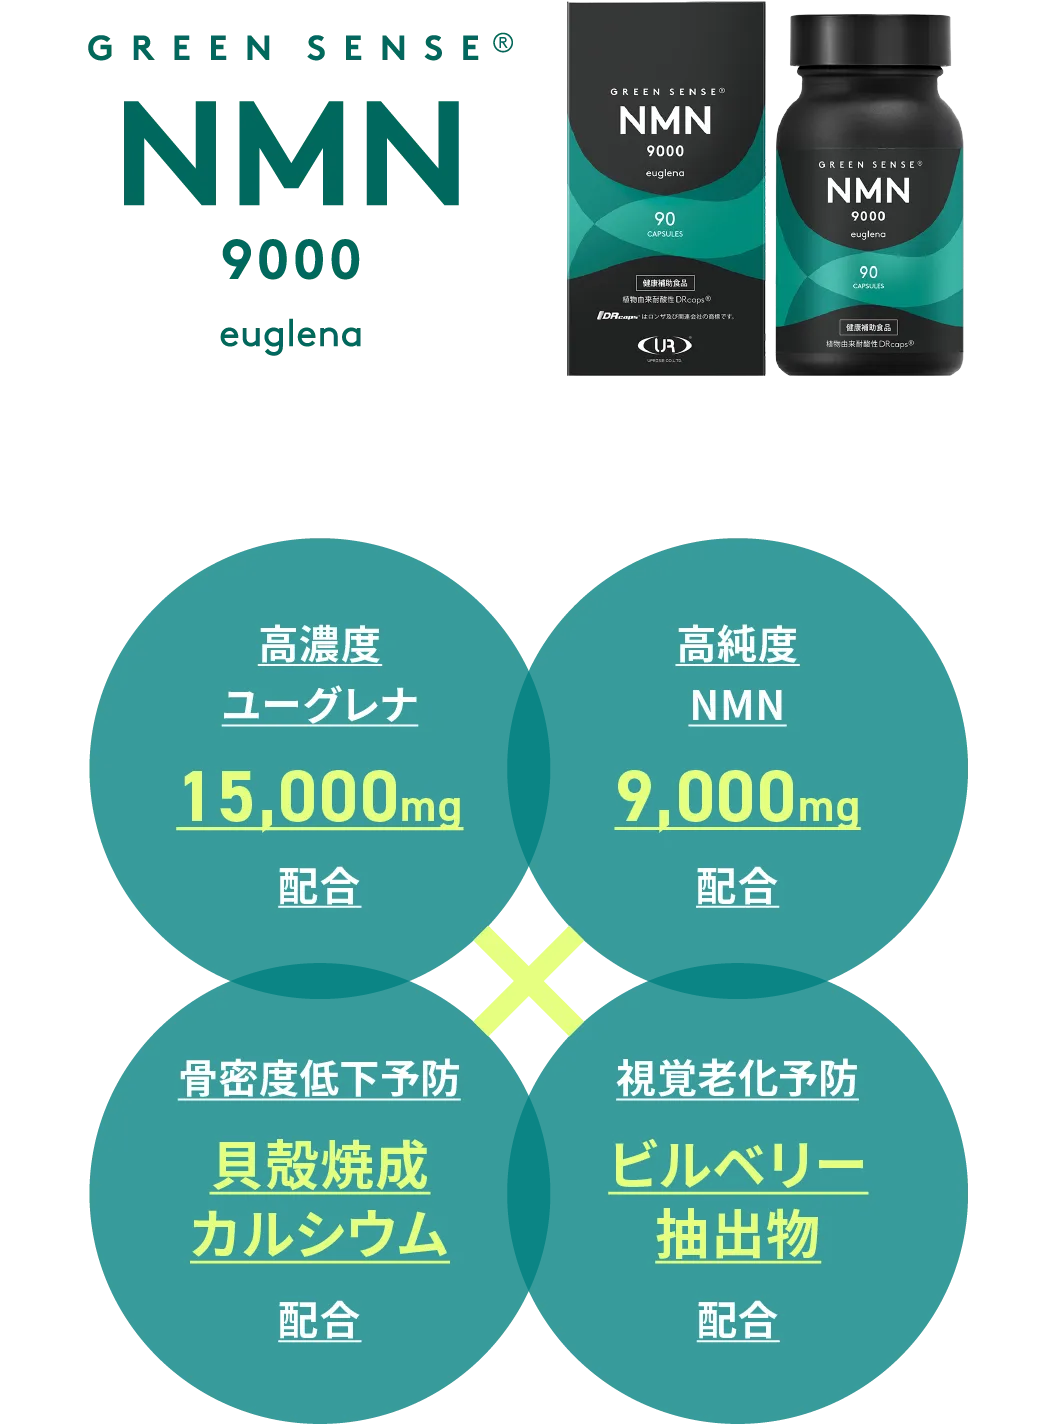 GREEN SENSE NMN9000 euglena®️ | 公式ホームページ